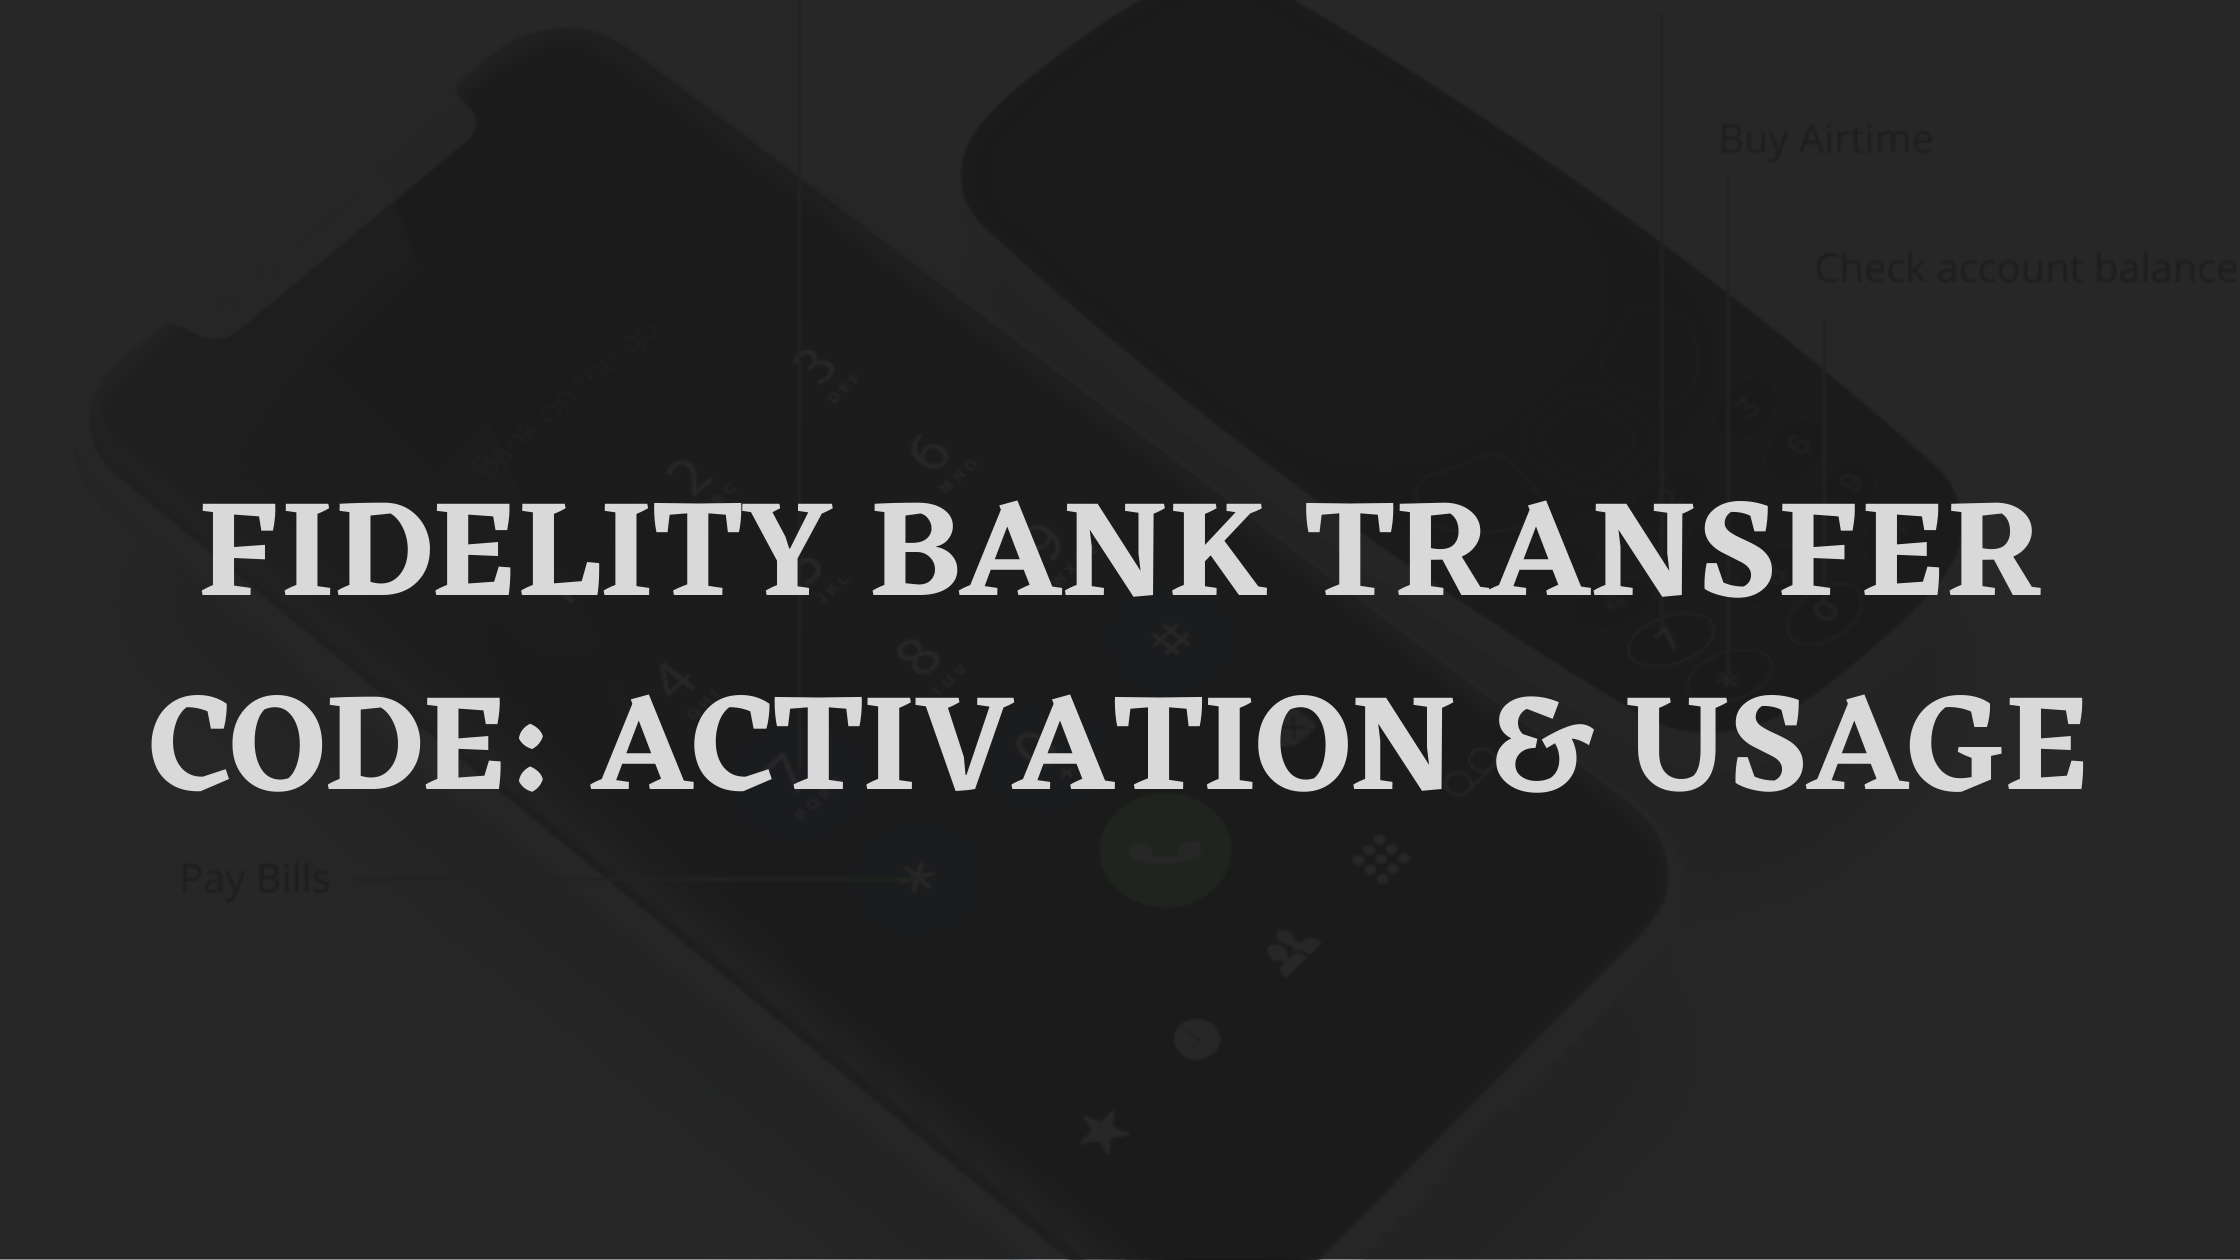 Fidelity bank transfer code